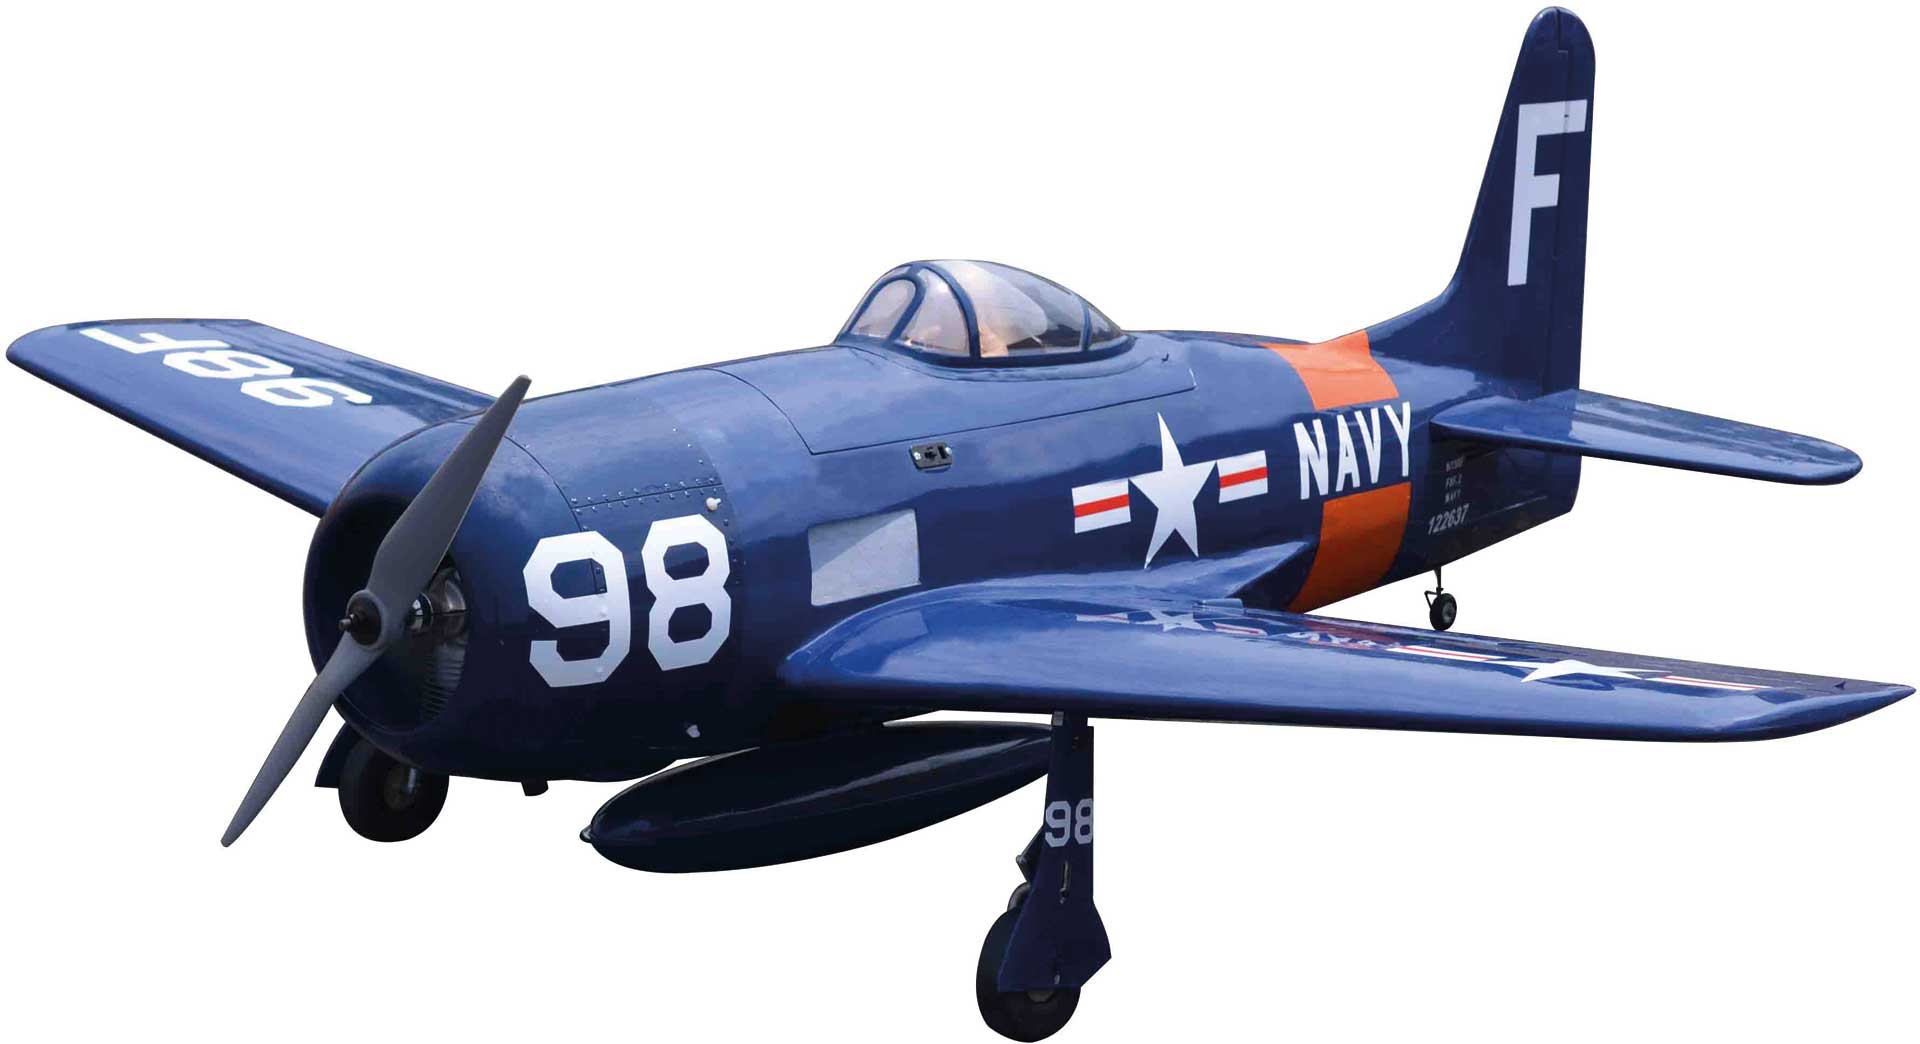 Seagull Models ( SG-Models ) Grumman F8F-2 Bearcat "NAVY" ARF 71" Warbird with retractable landing gear machanic 33-45cc